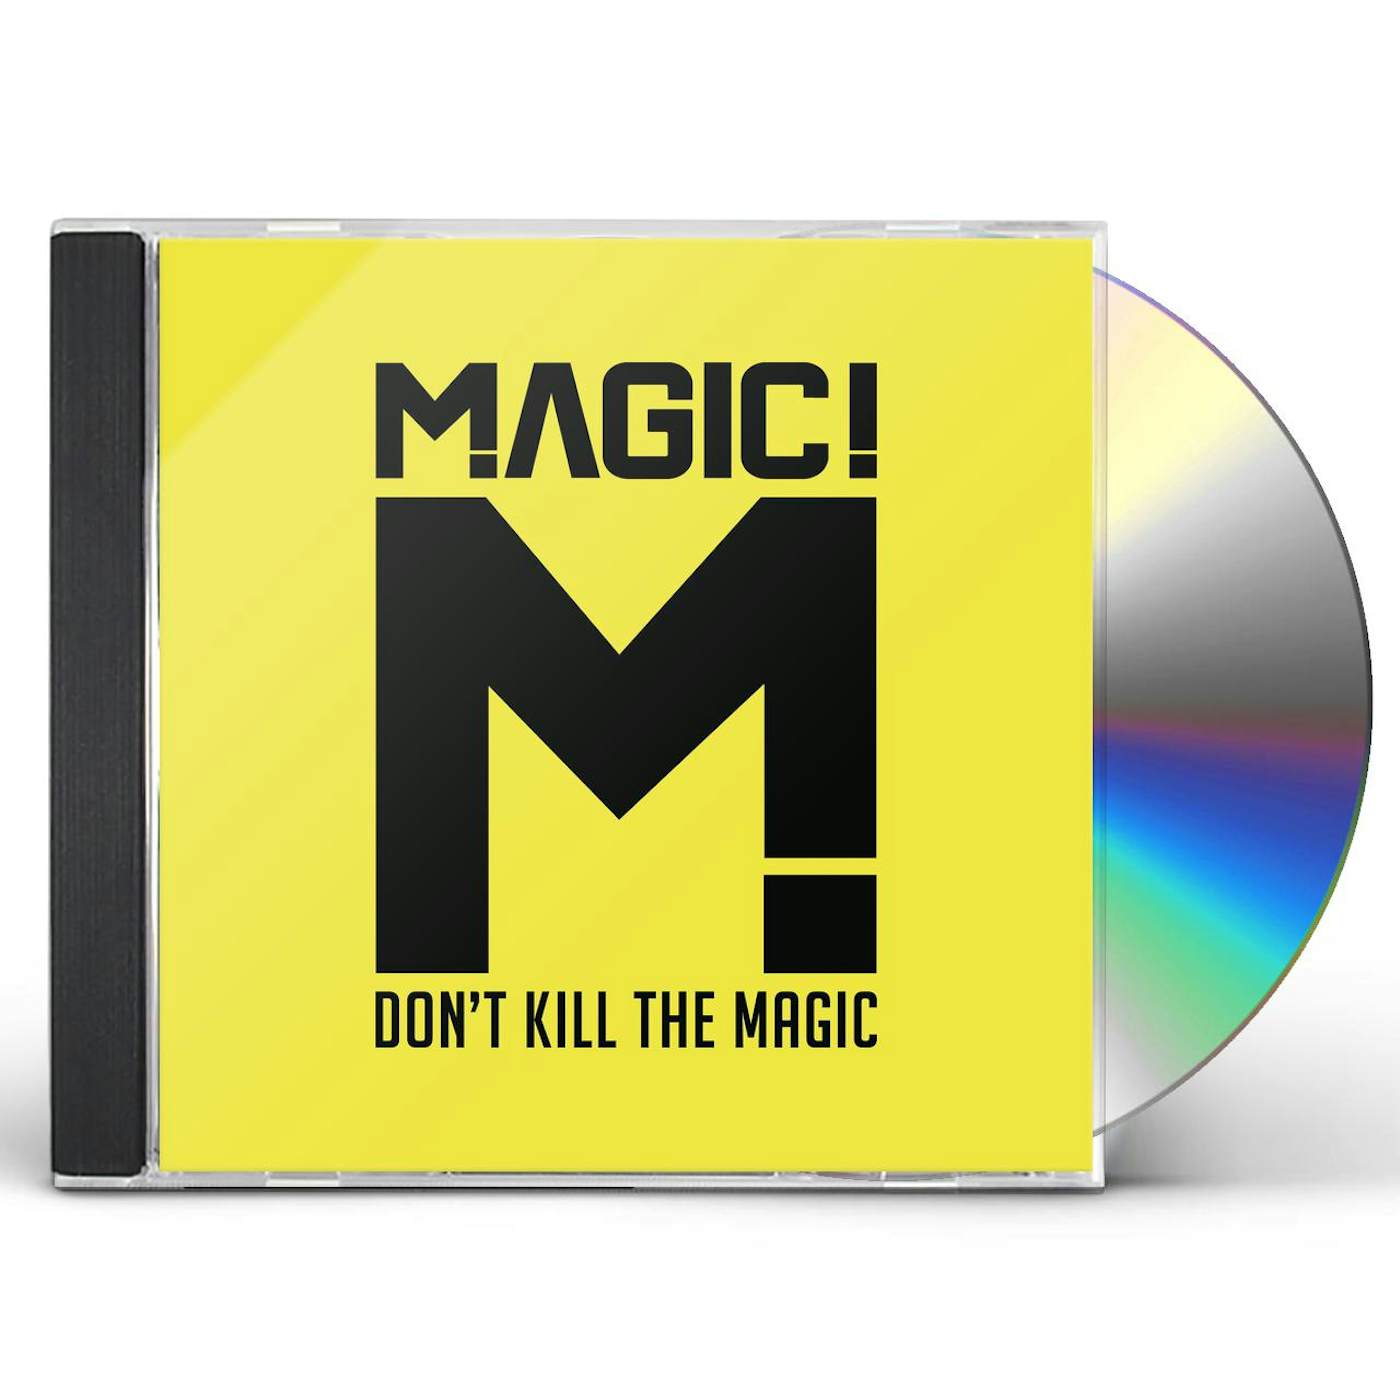 DON'T KILL THE MAGIC! CD